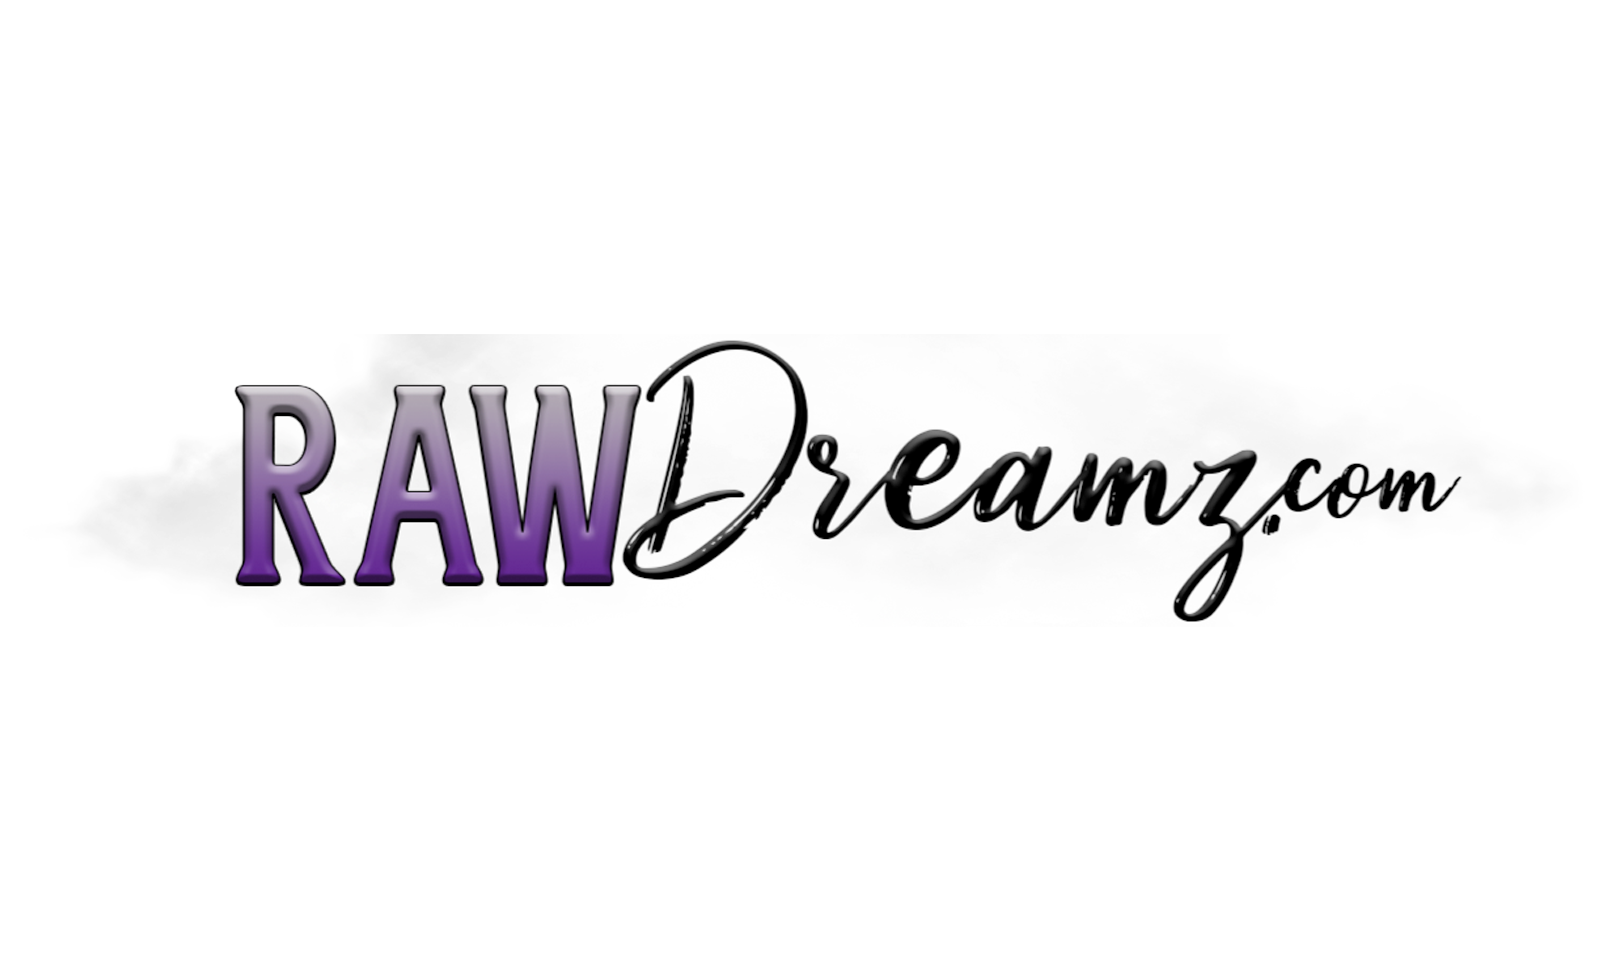 Deep Dreamz Productions Announces New Releases